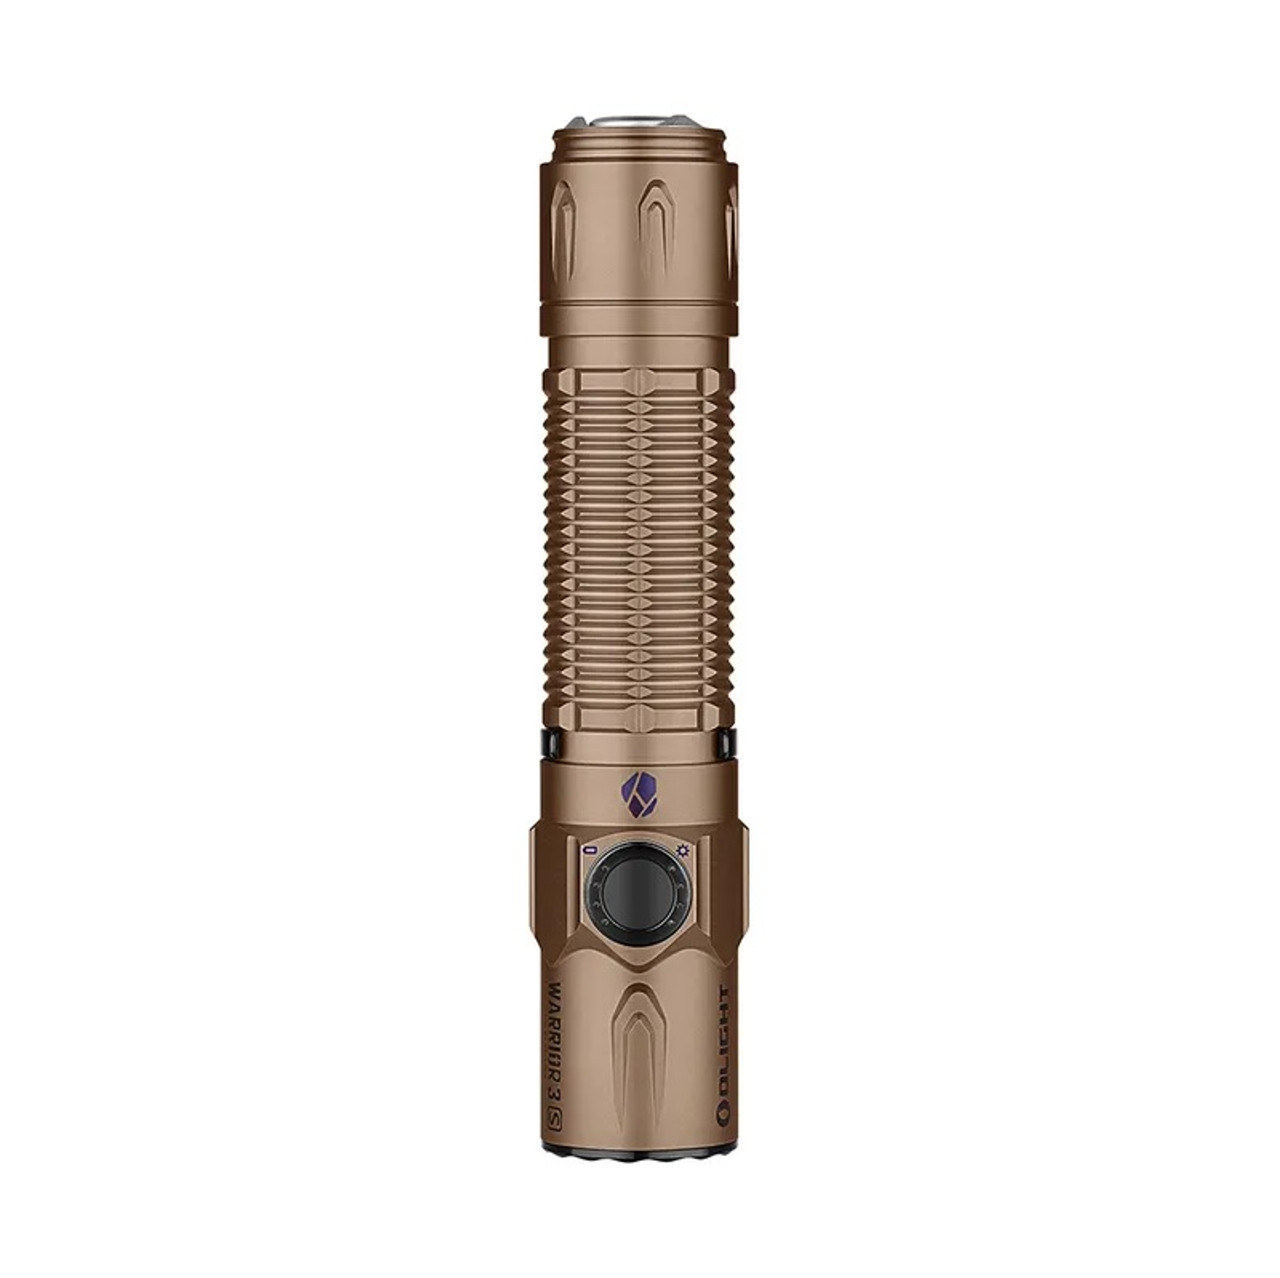 OLight Warrior 3S LED (monocolore) Torcia tascabile con fondina